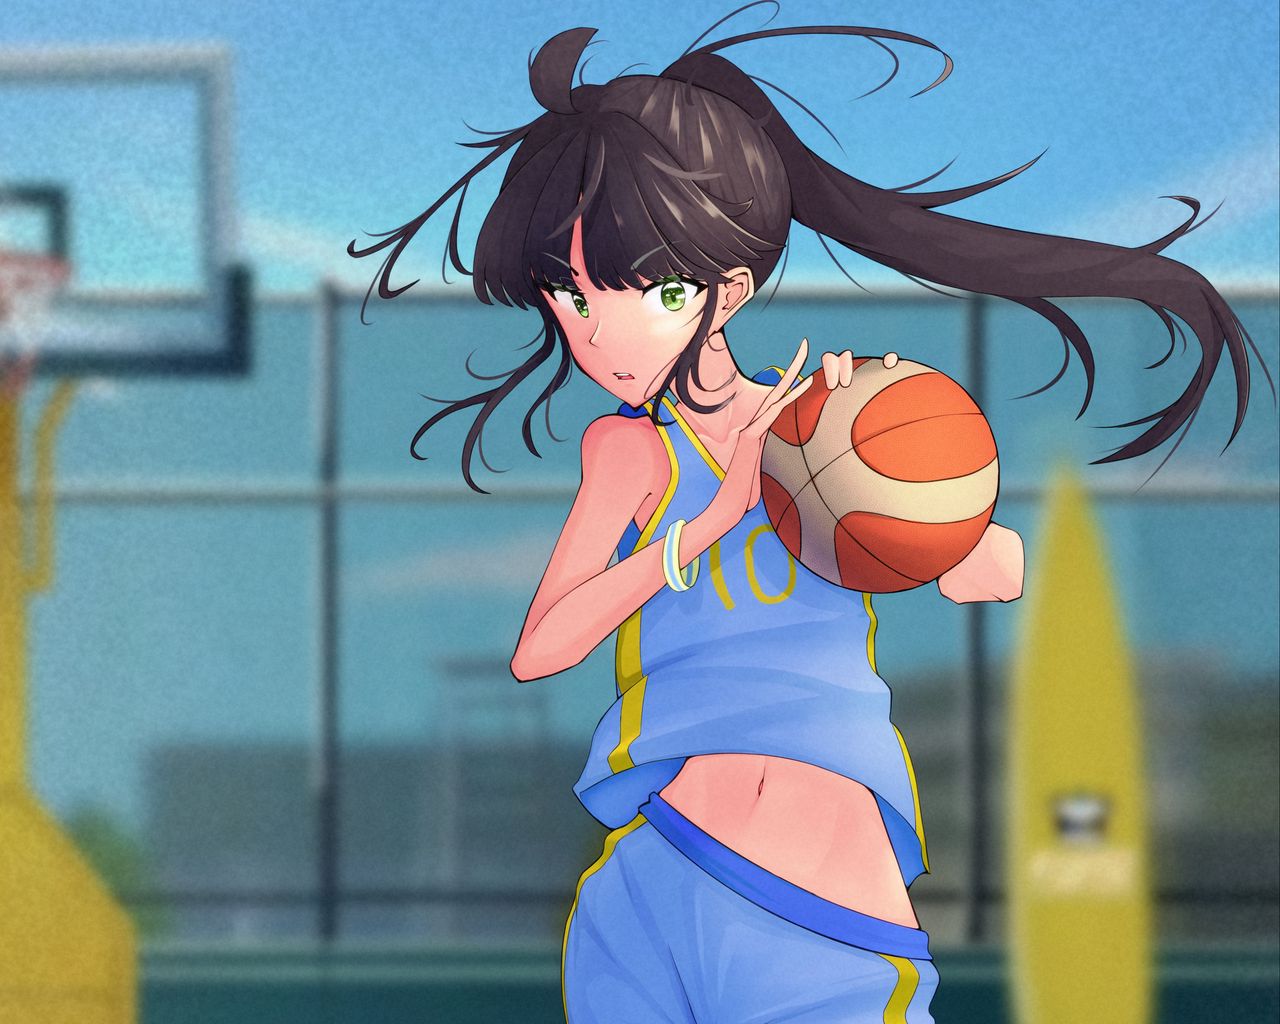 Download wallpaper 1280x1024 girl, ball, basketball, anime, sport standard 5:4 hd background